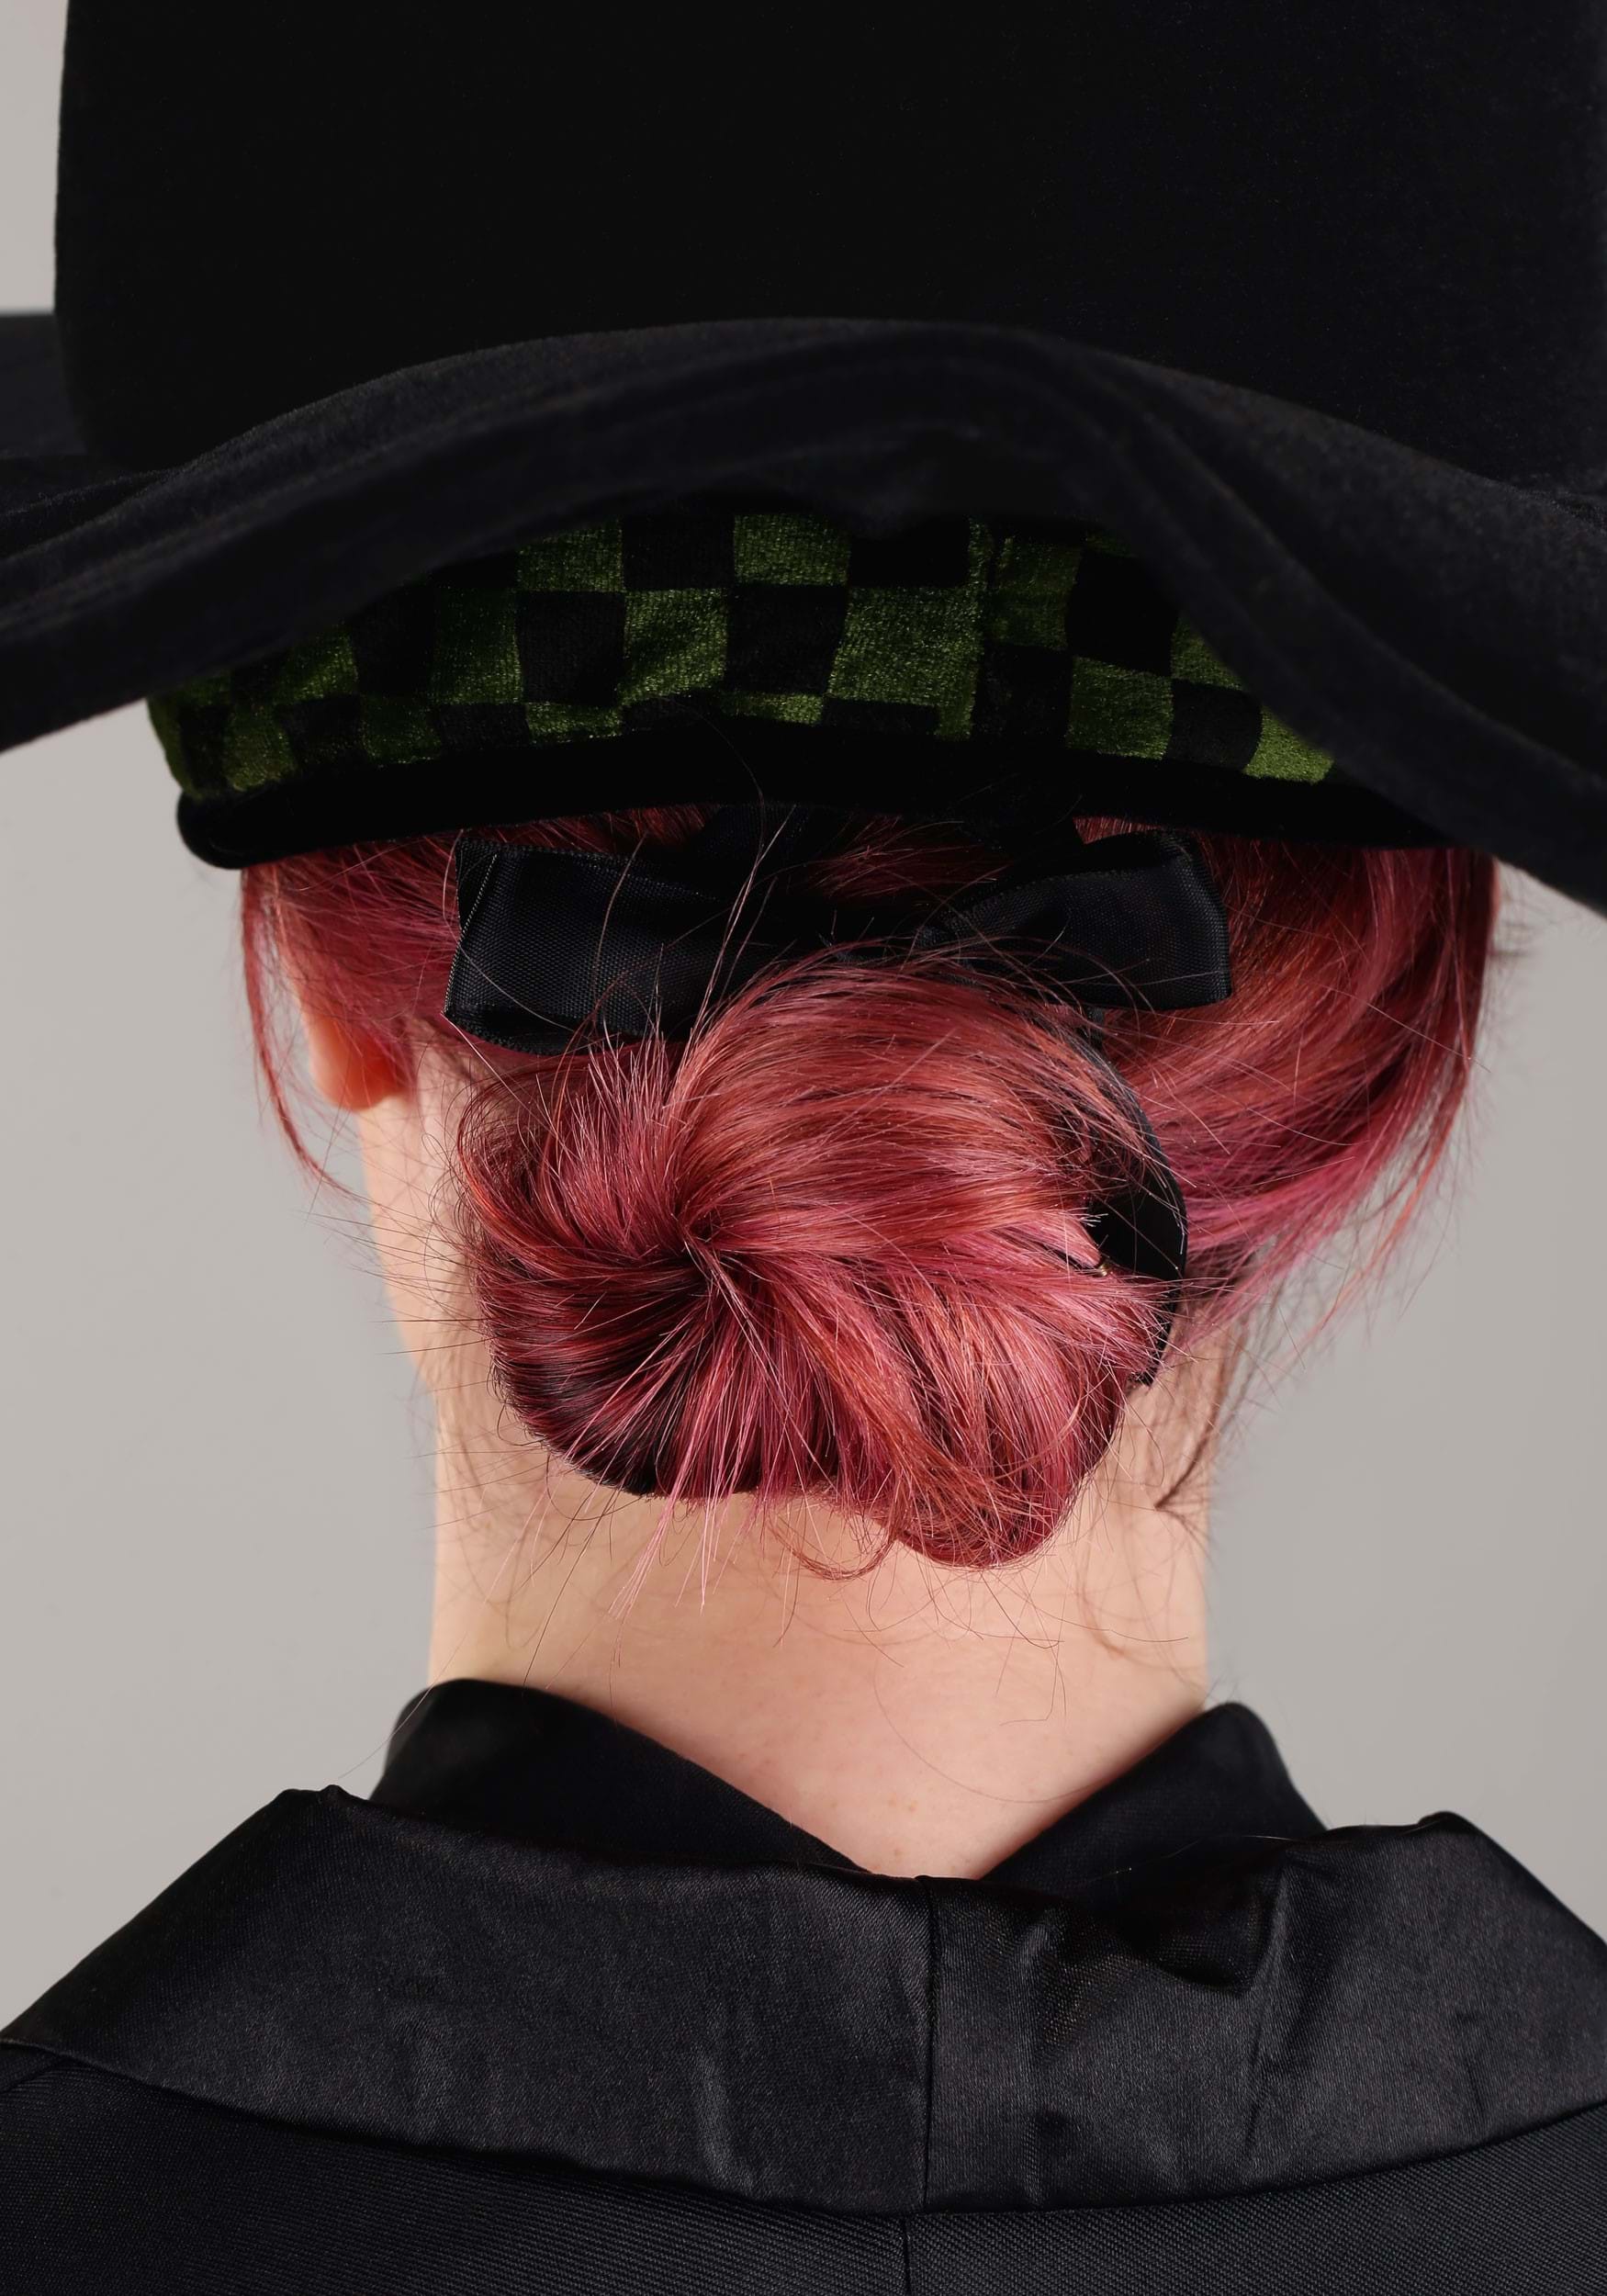 Professor McGonagall Fancy Dress Costume Hat For Women